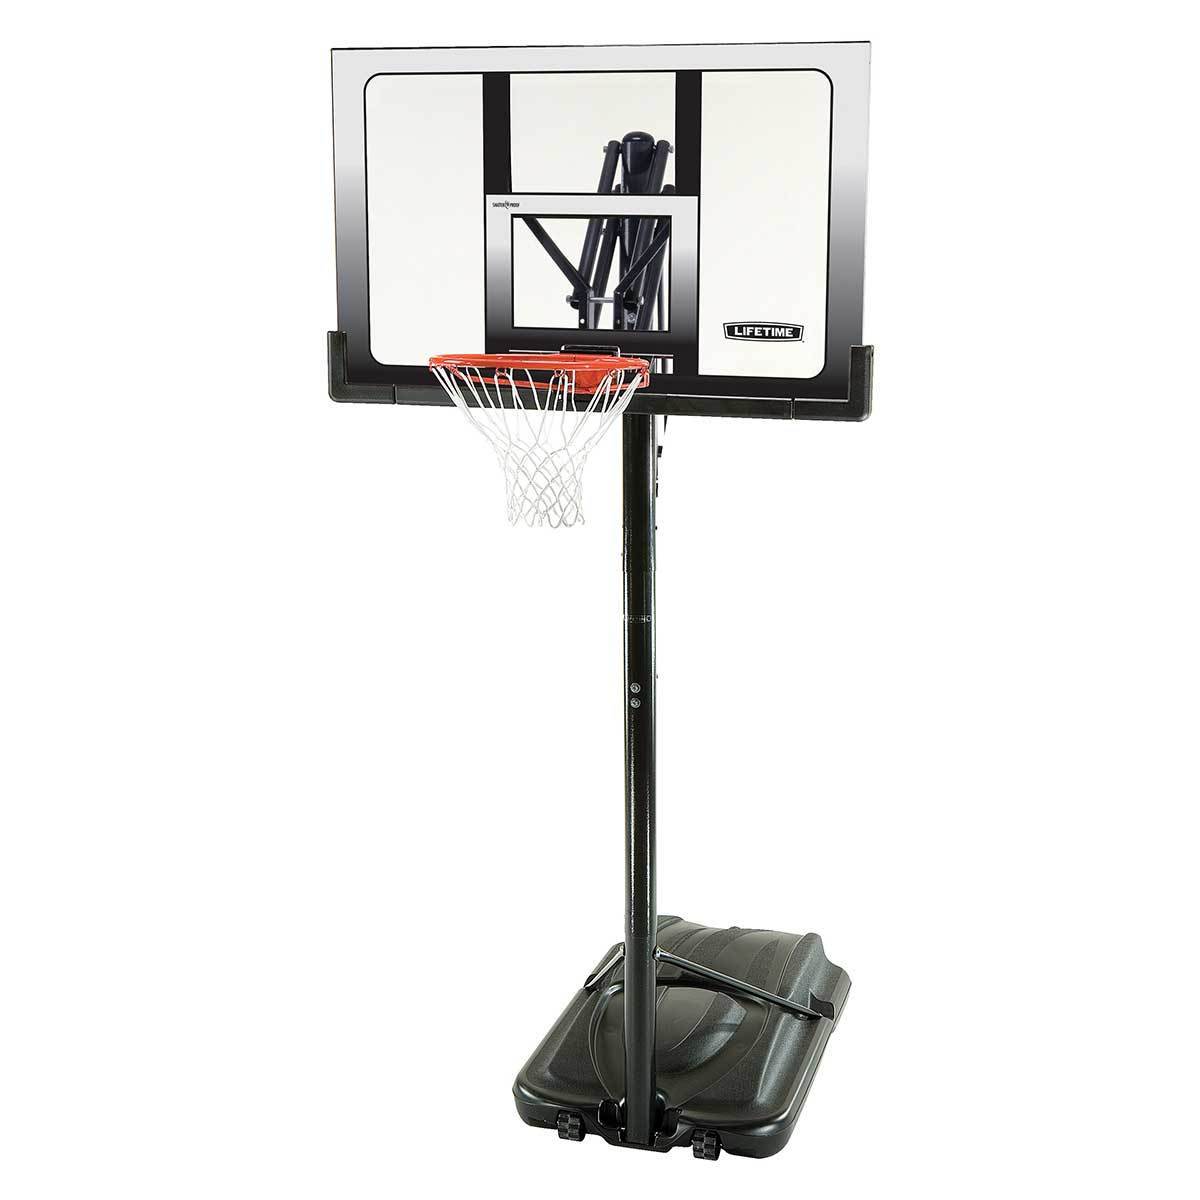 Lifetime 52 Inch Portable Basketball Hoop